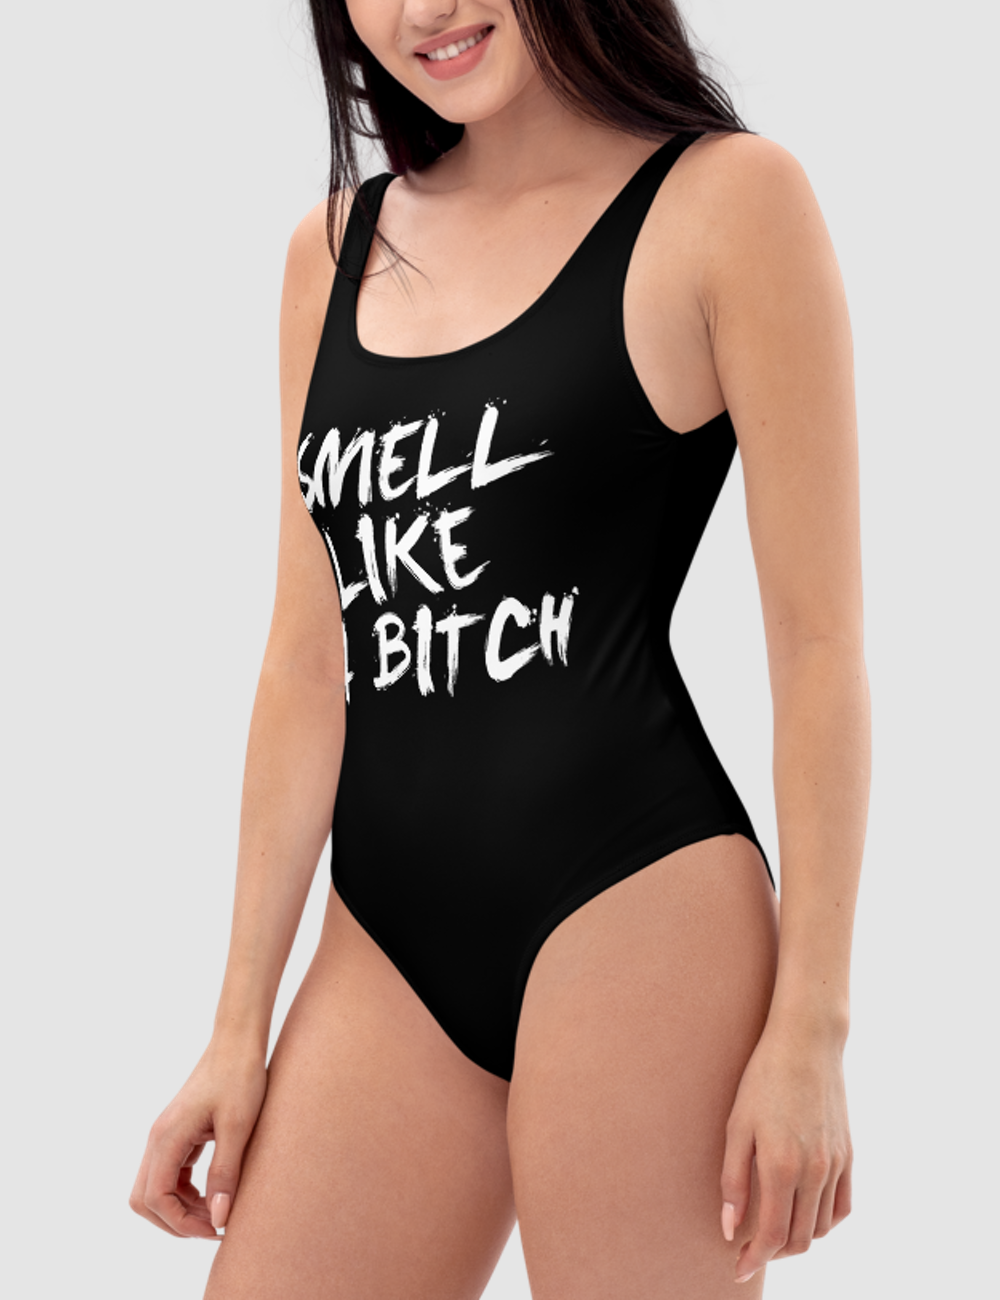 Smell Like A Bitch | Women's One-Piece Swimsuit OniTakai